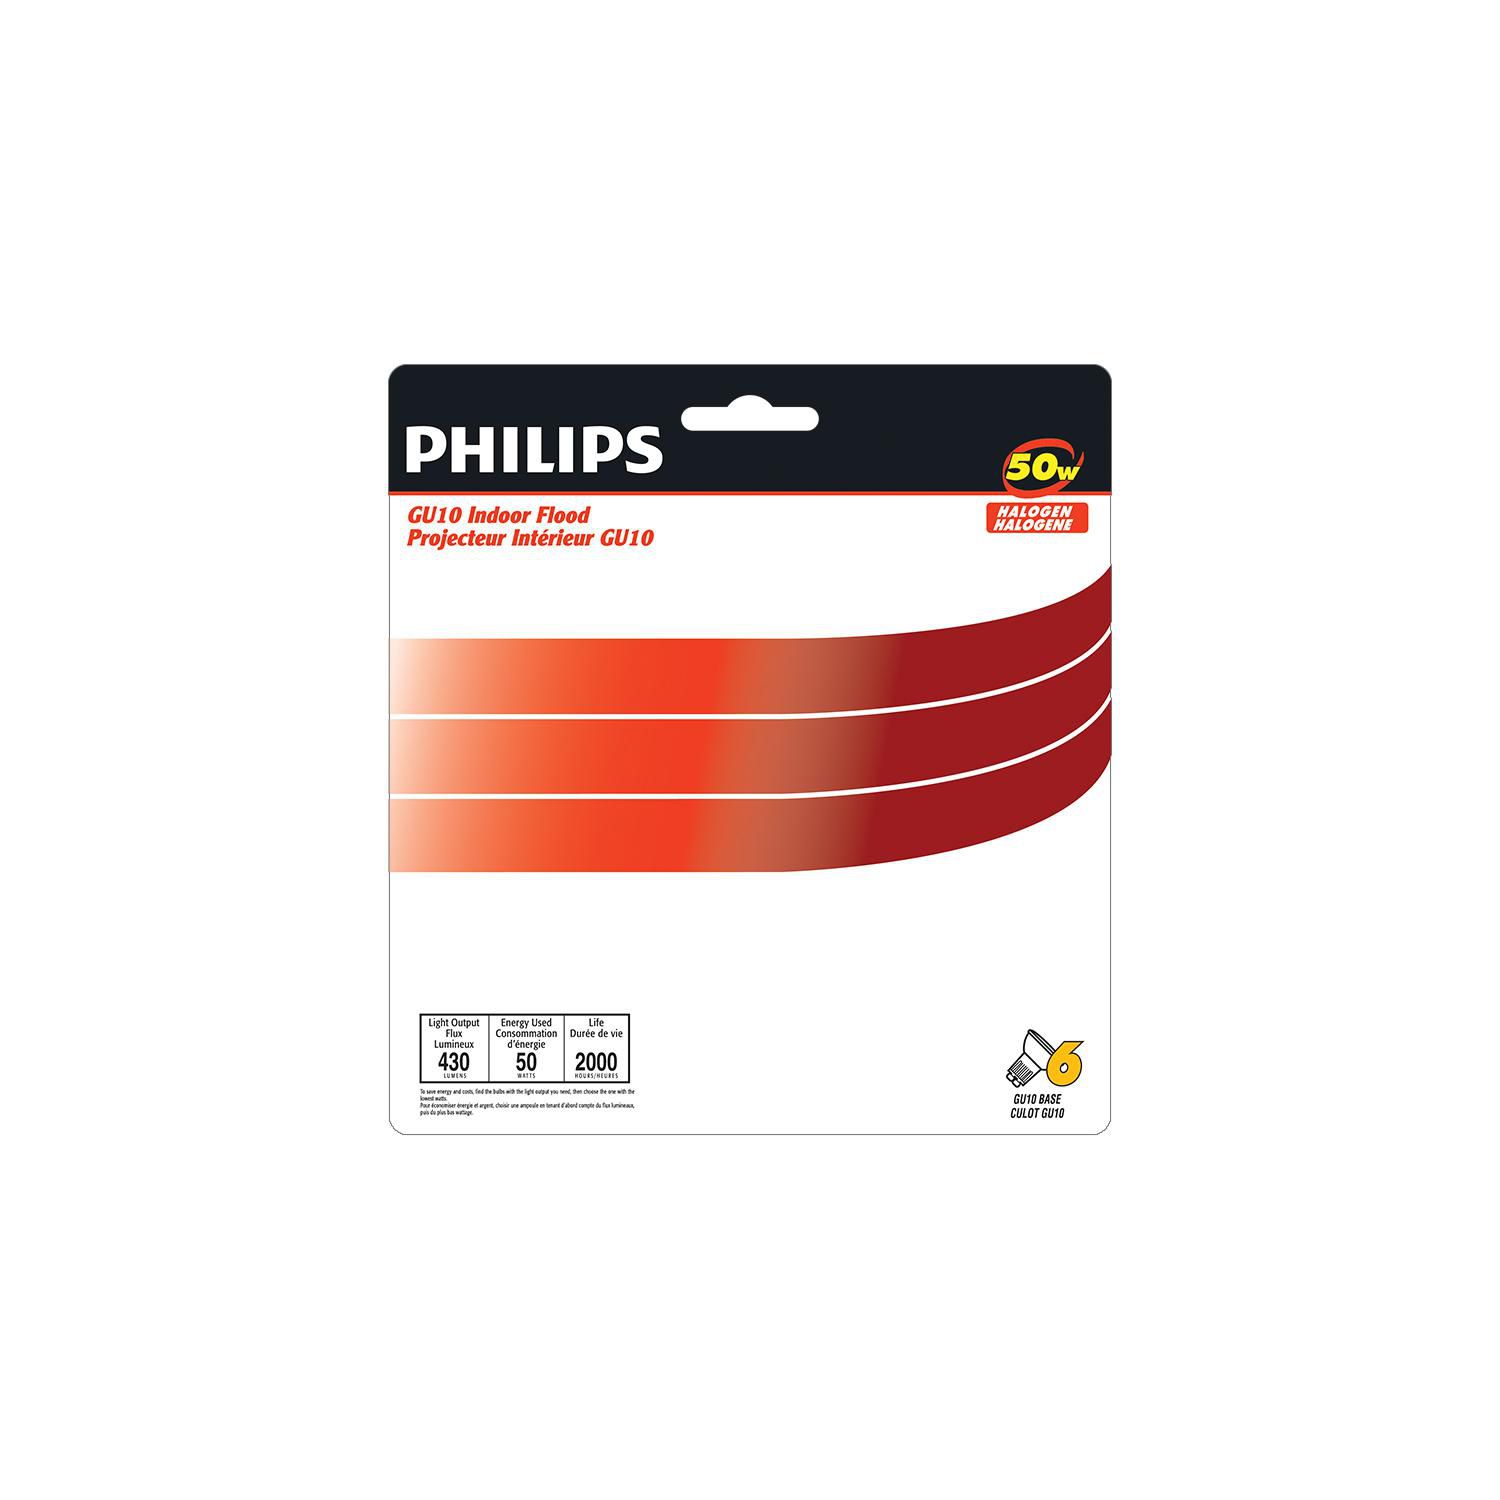 Philips 213462 Halogen 50W GU10 Flood Light Bulb 6 Pack 